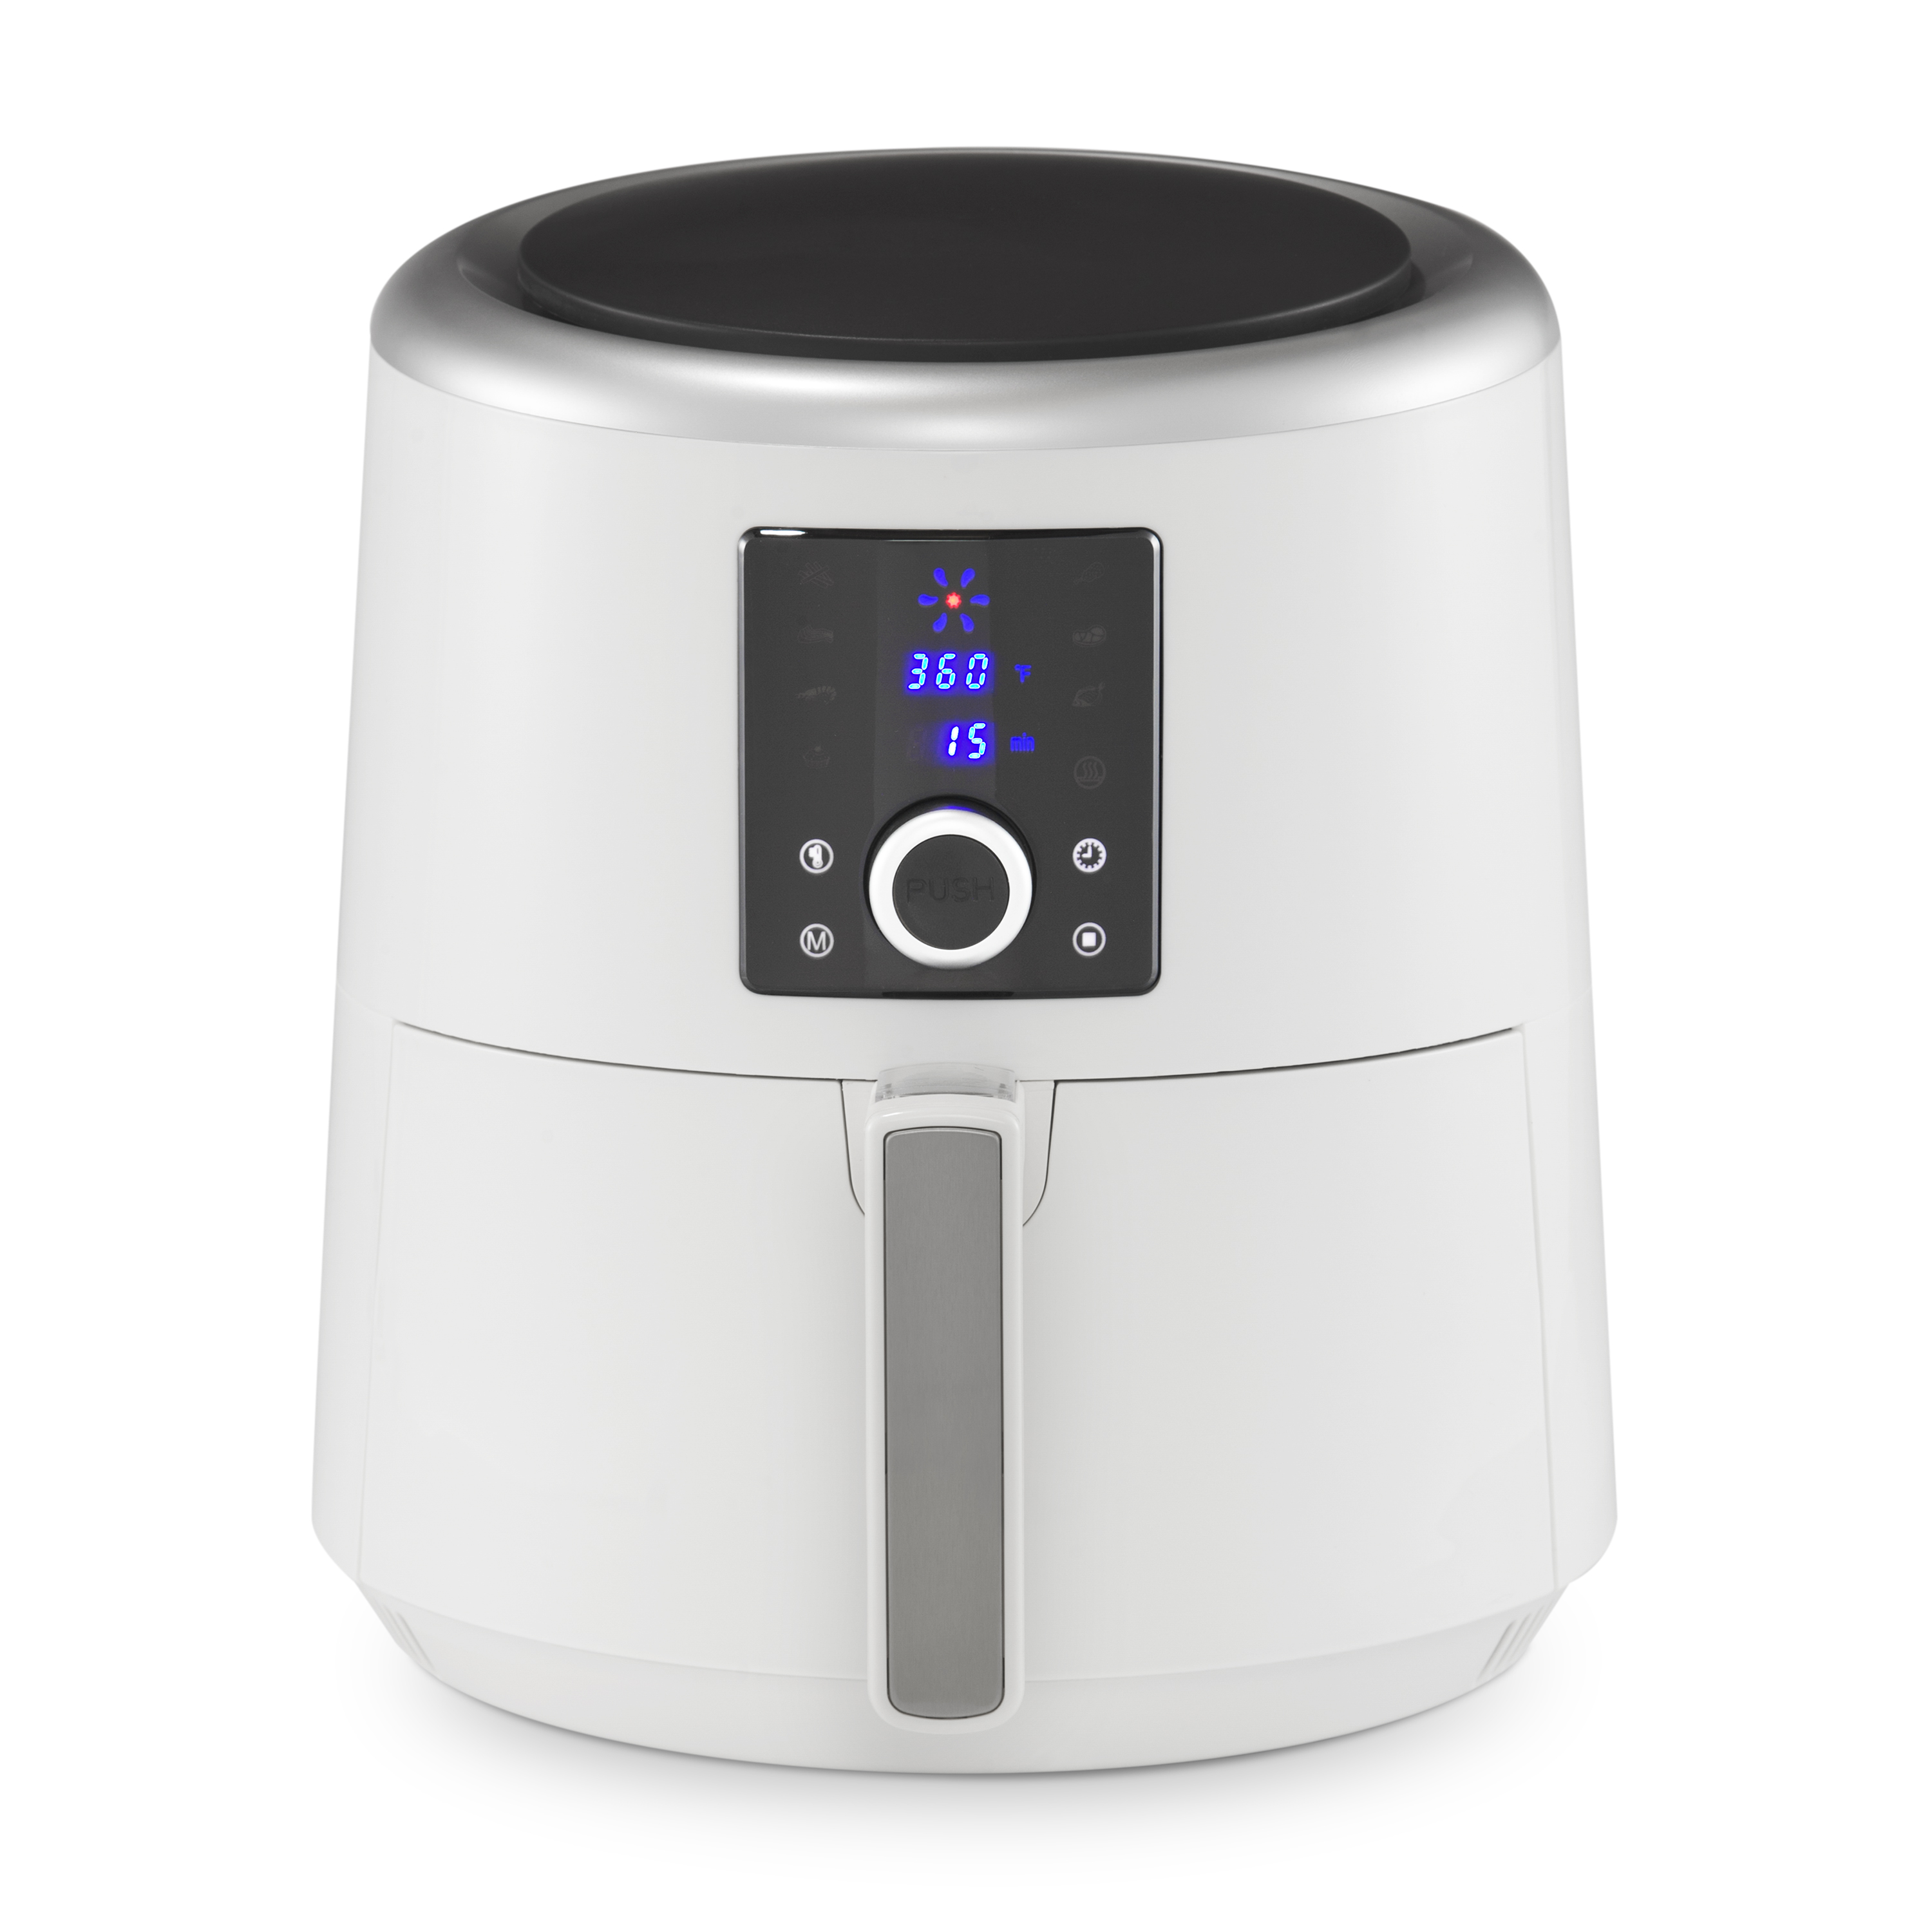 La Gourmet 6-Qt. Digital Air Fryer and Convection Oven Only $65.65! (Reg $89)